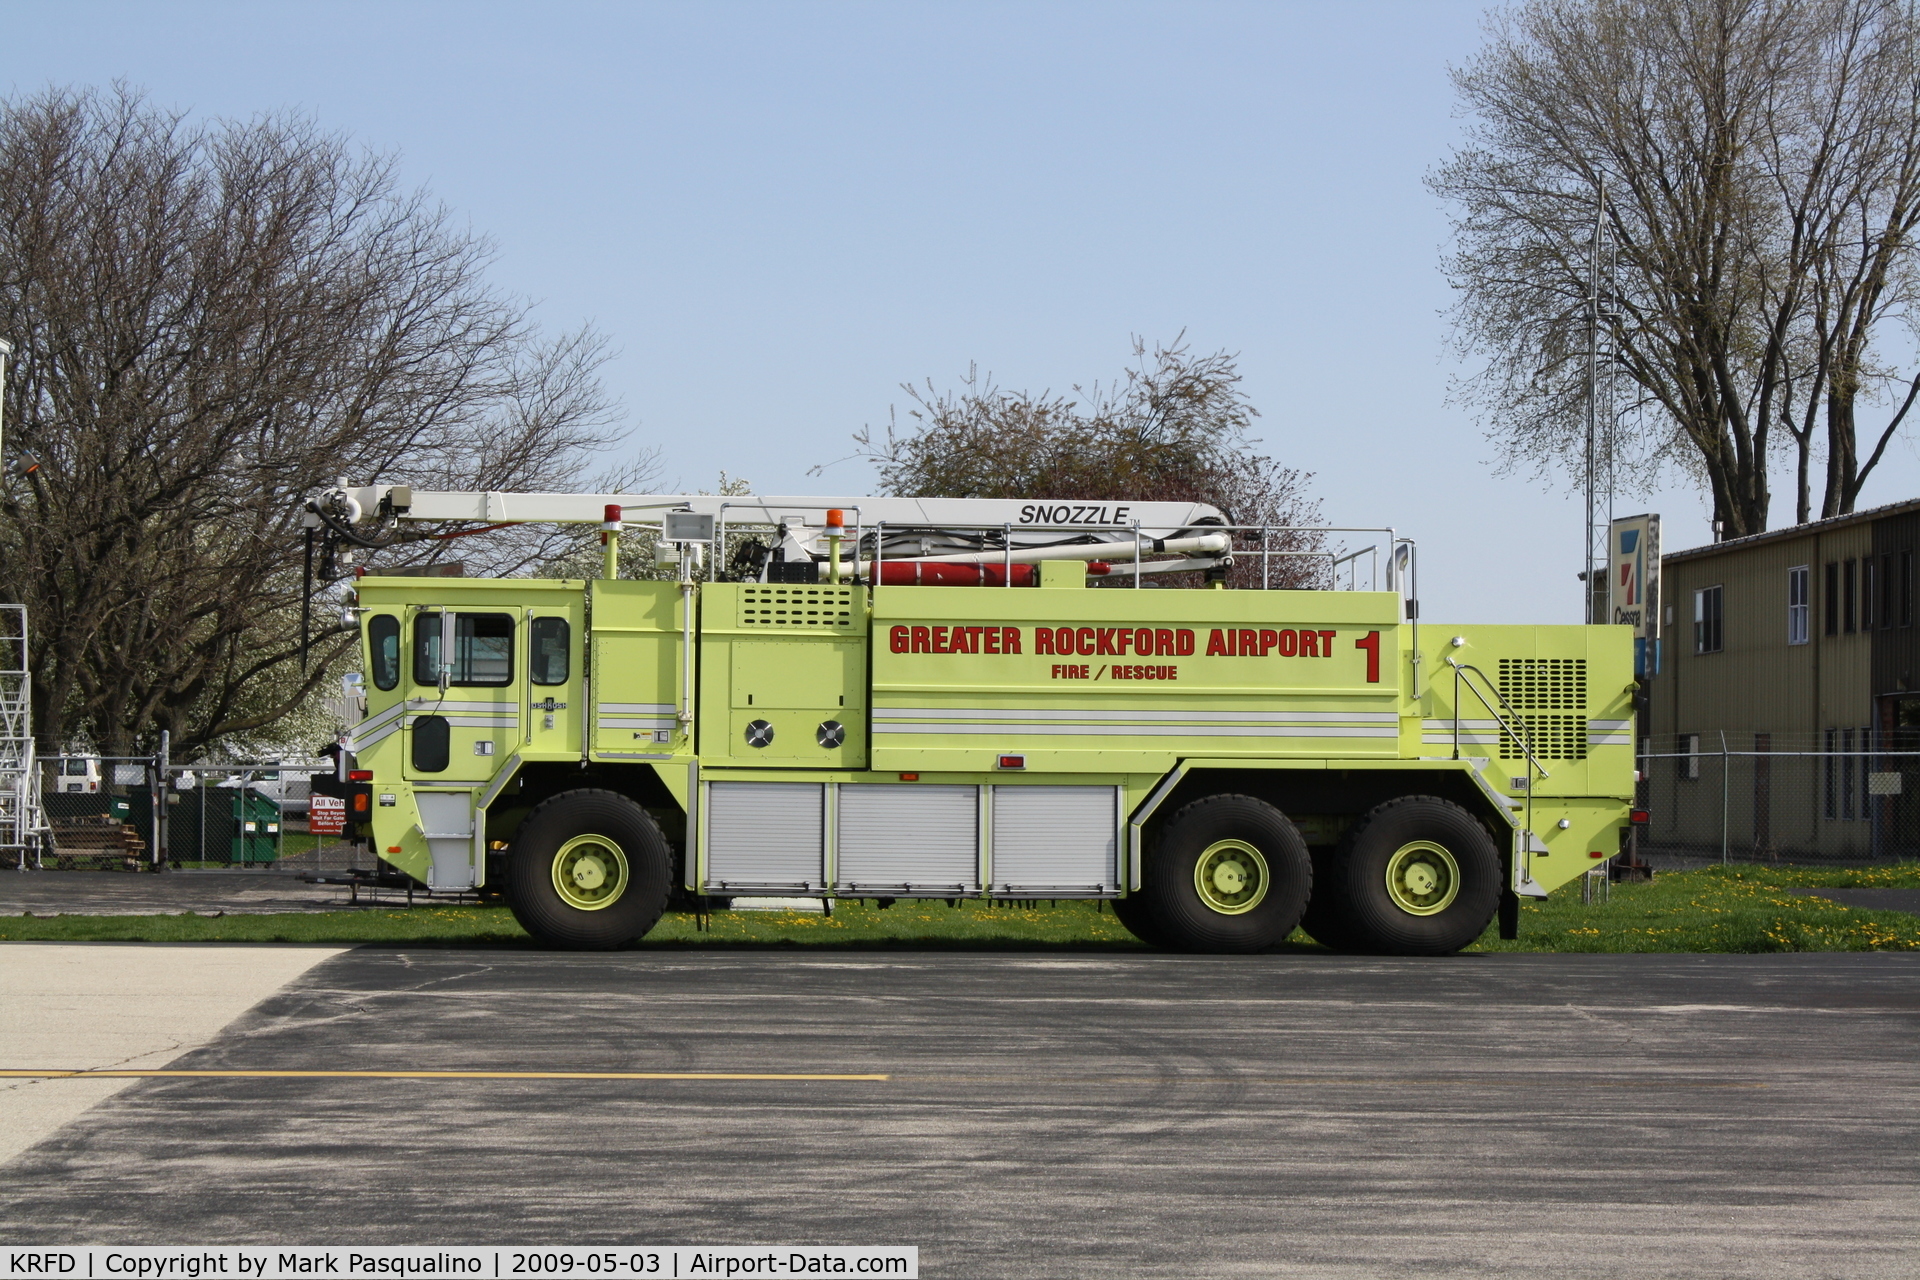 Chicago/rockford International Airport (RFD) - Fire/crash rescue